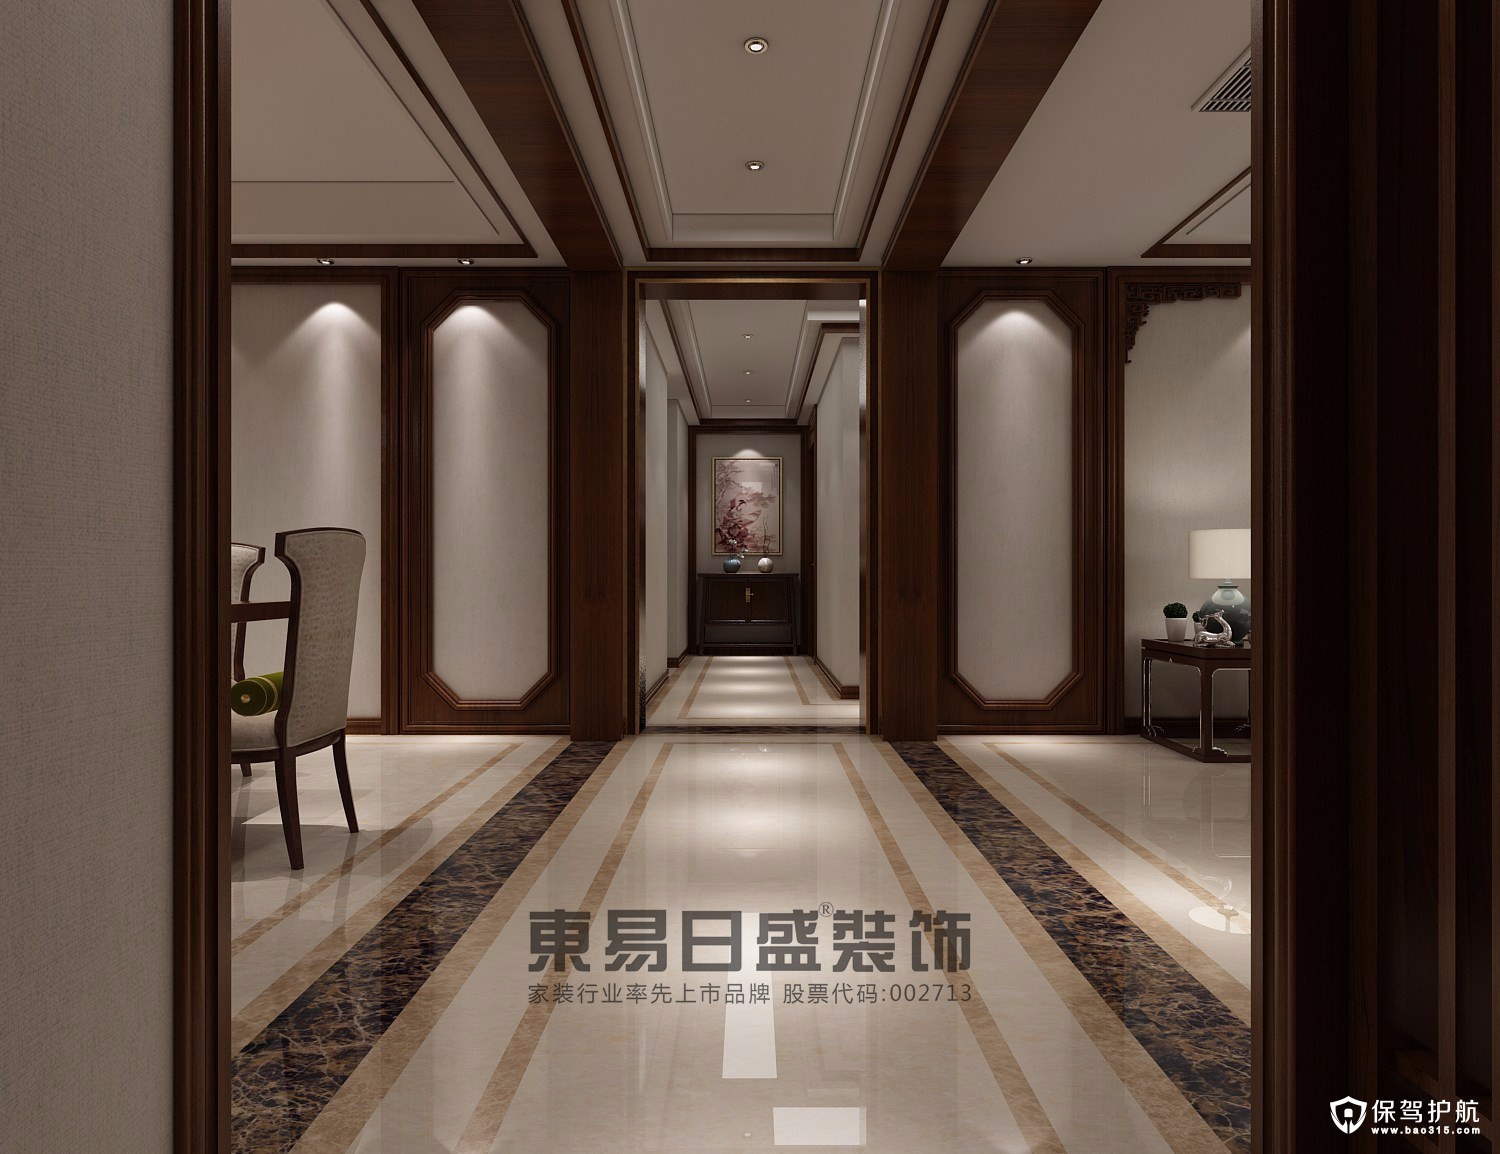 Y南风花园220㎡ 中式风格 四室两厅